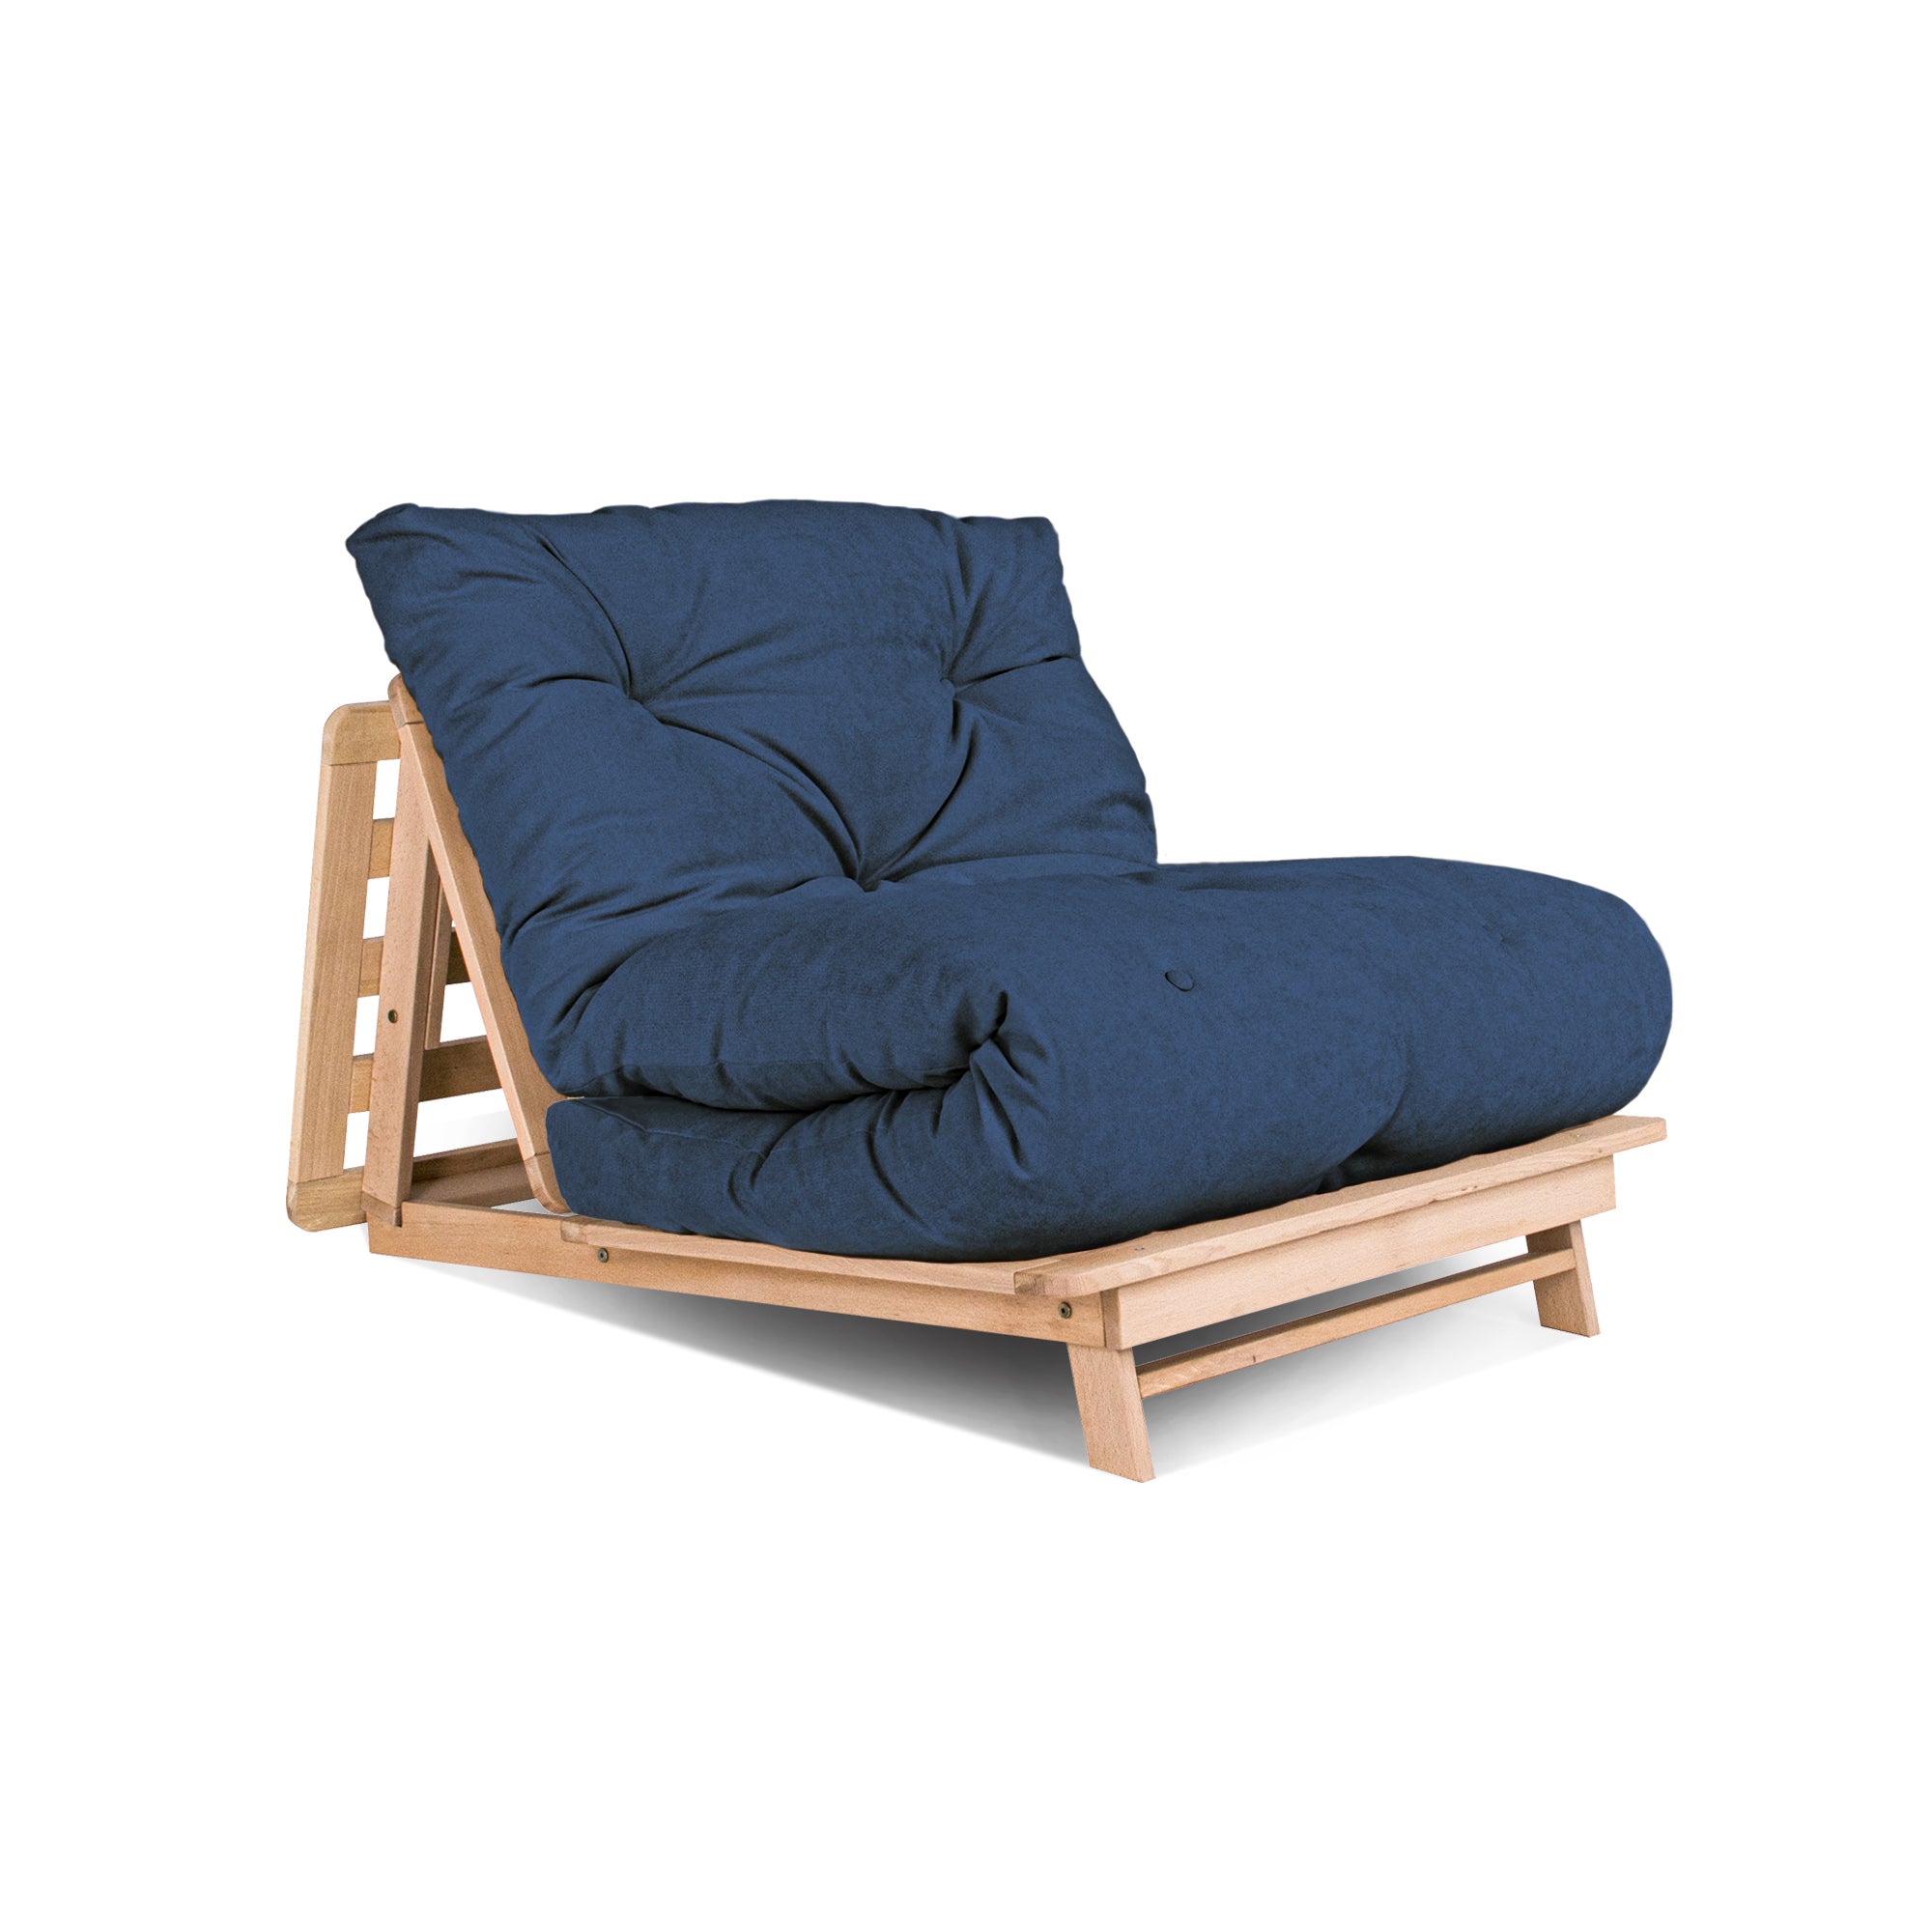 LAYTI-90 Futon Chair, Beech Wood Frame, Natural Colour-blue fabric